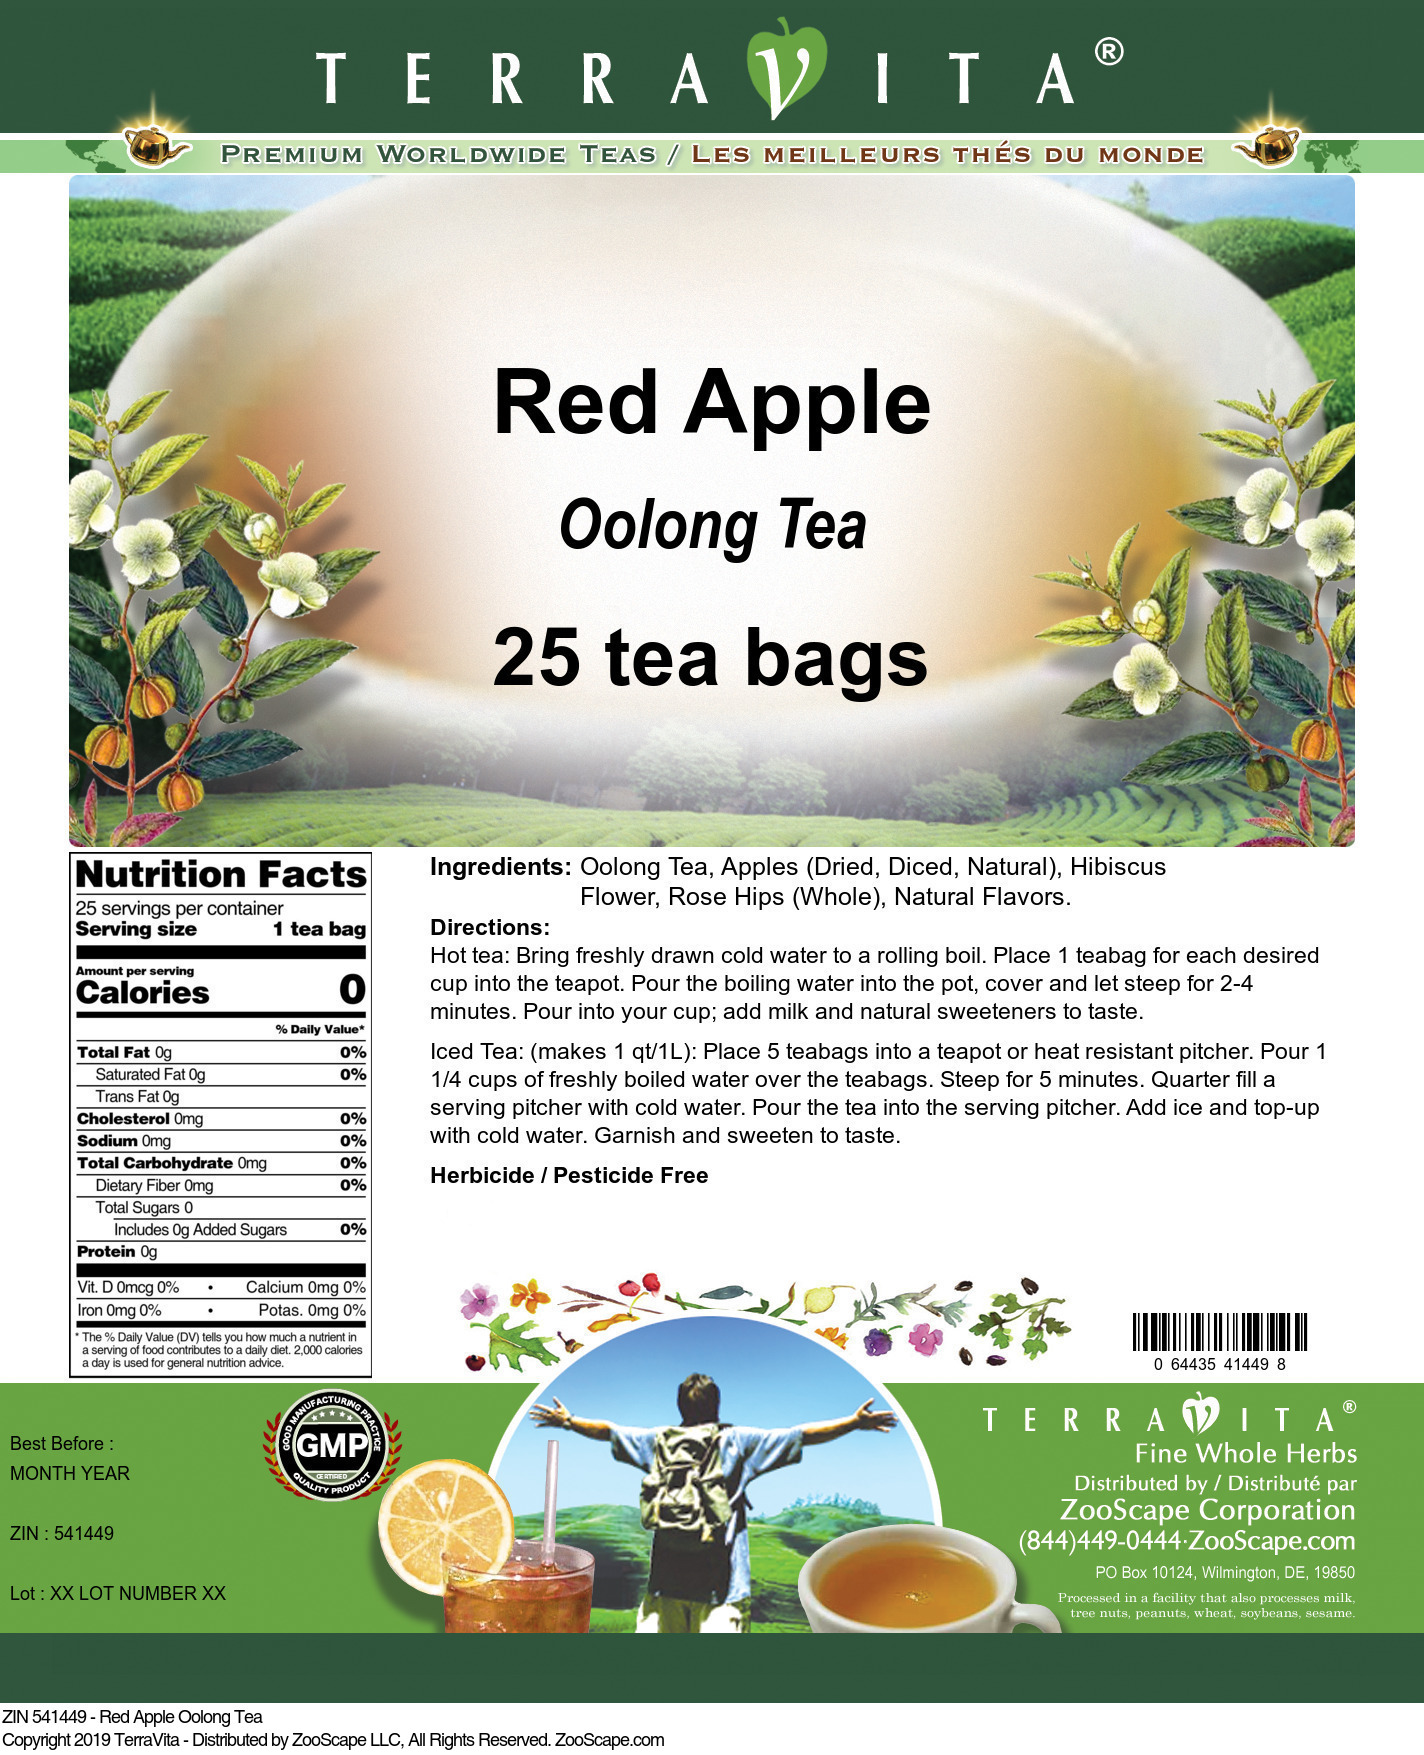 Red Apple Oolong Tea - Label